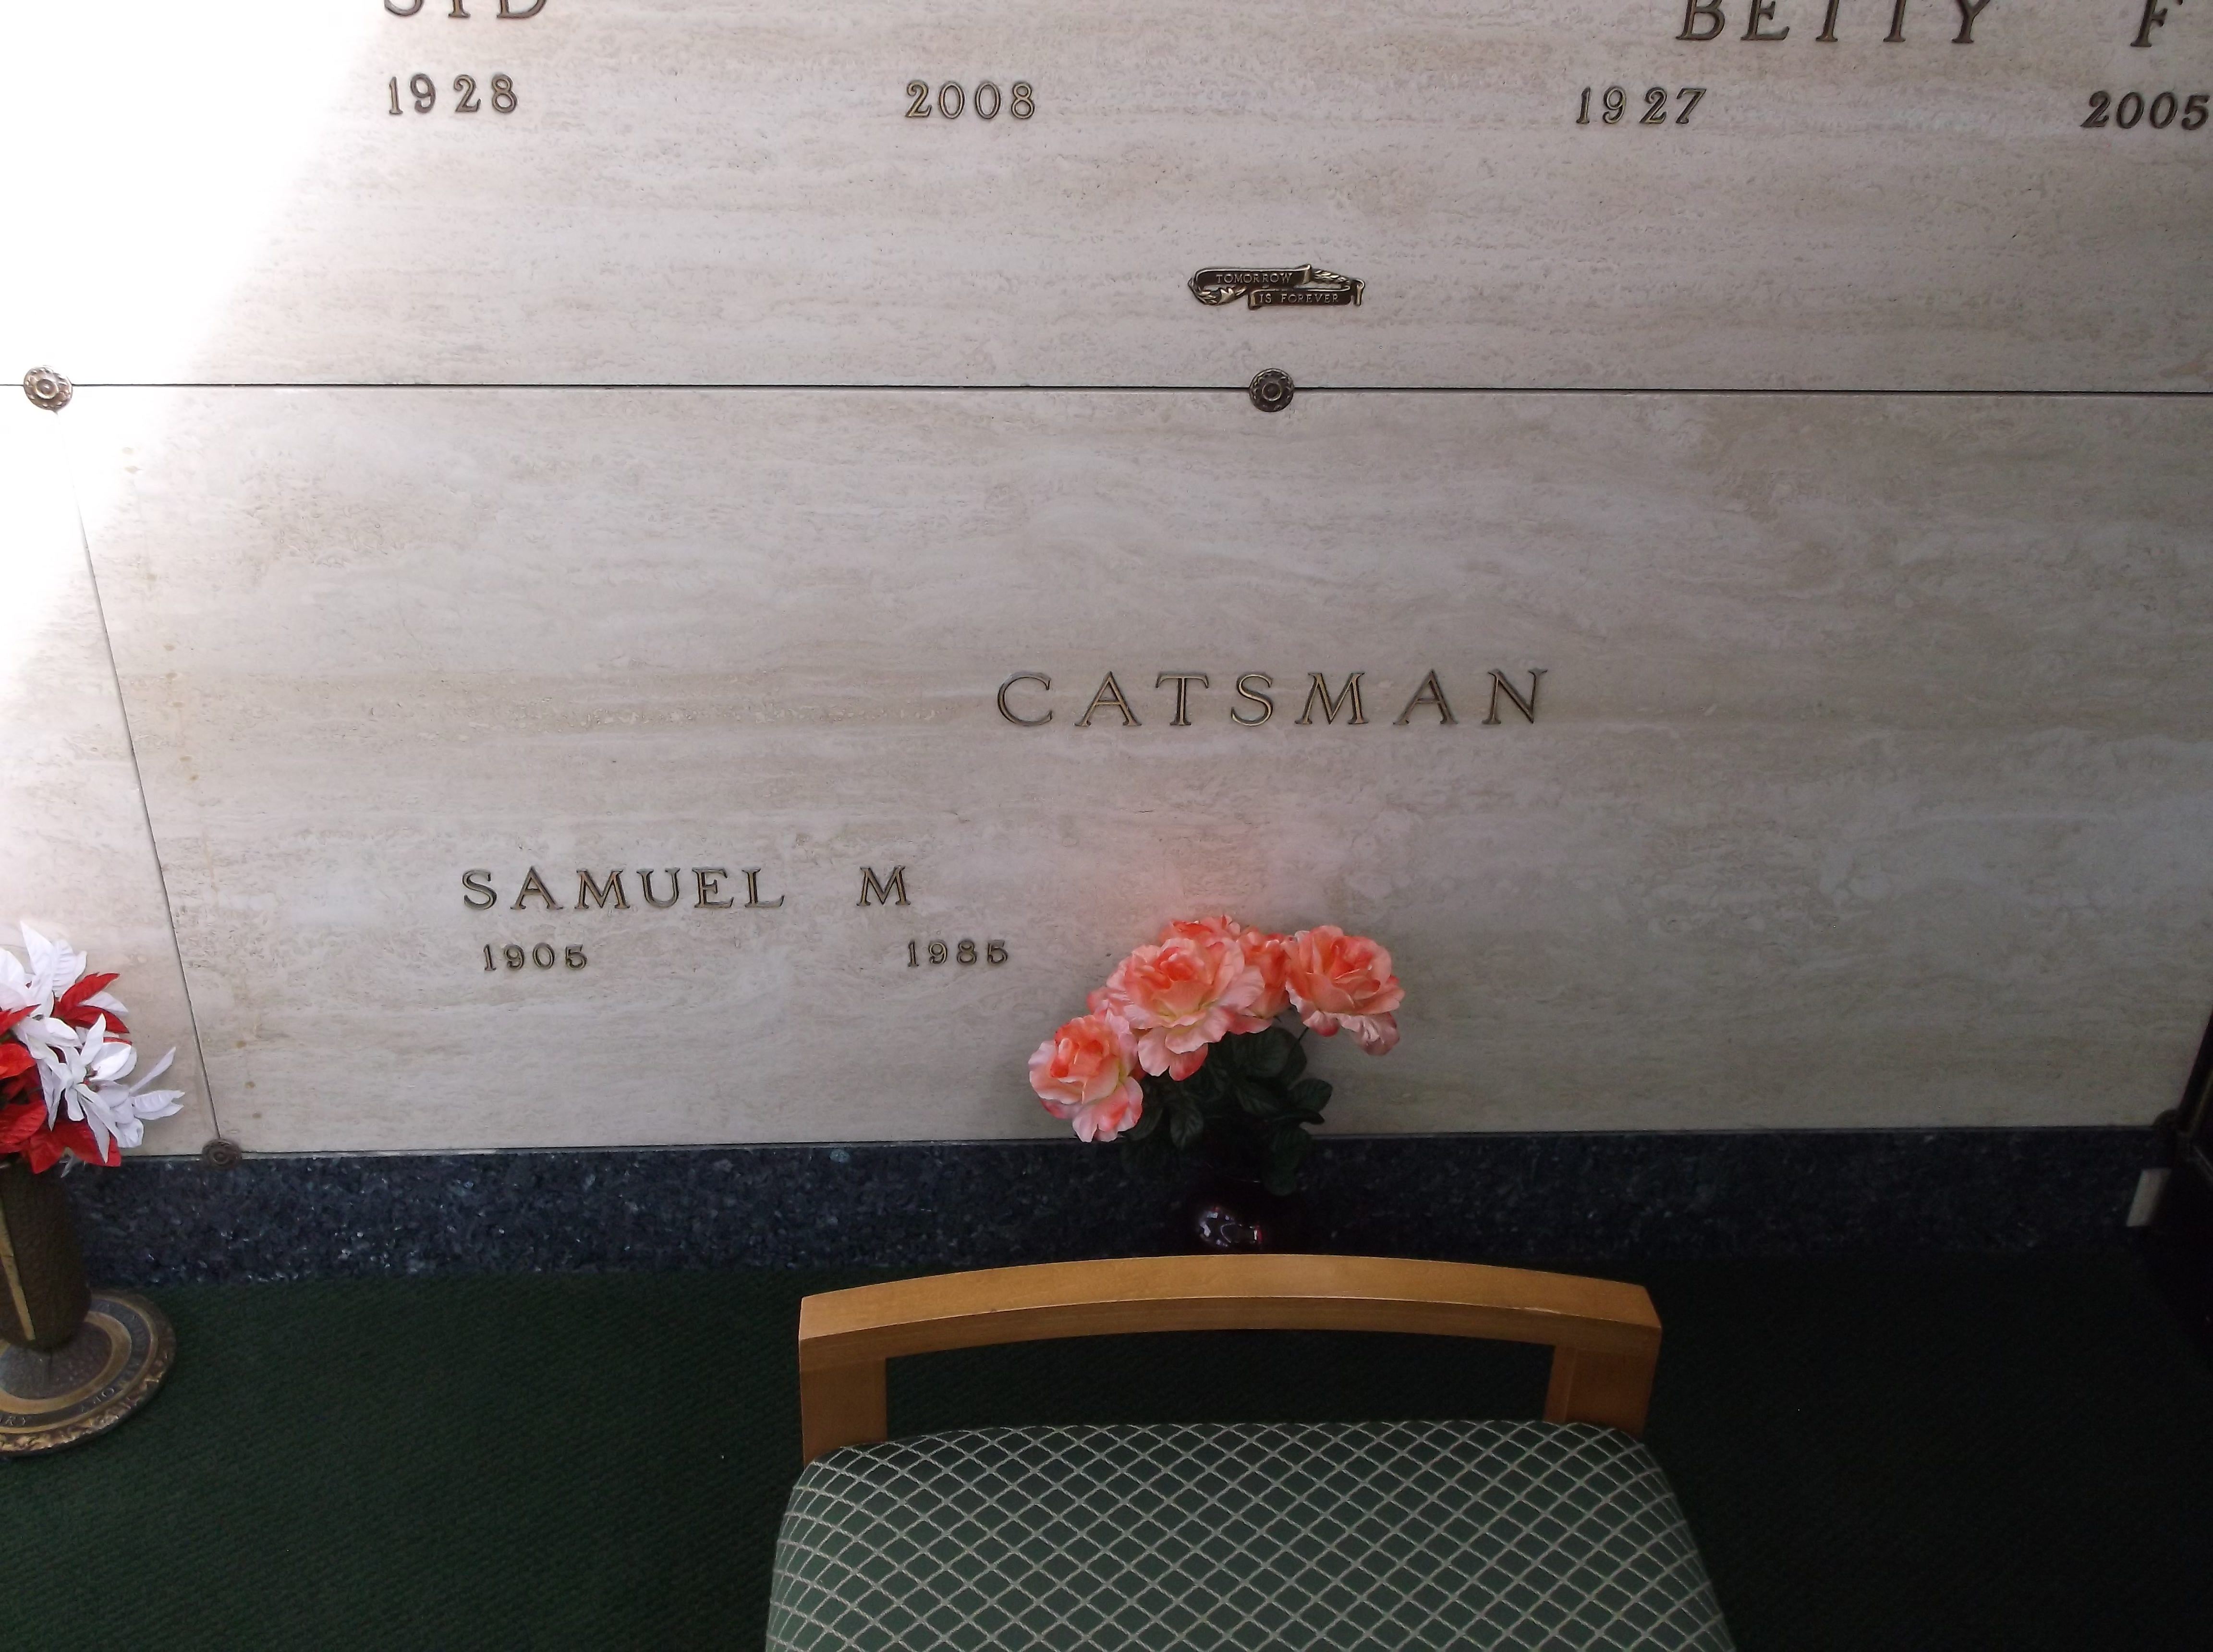 Samuel M Catsman